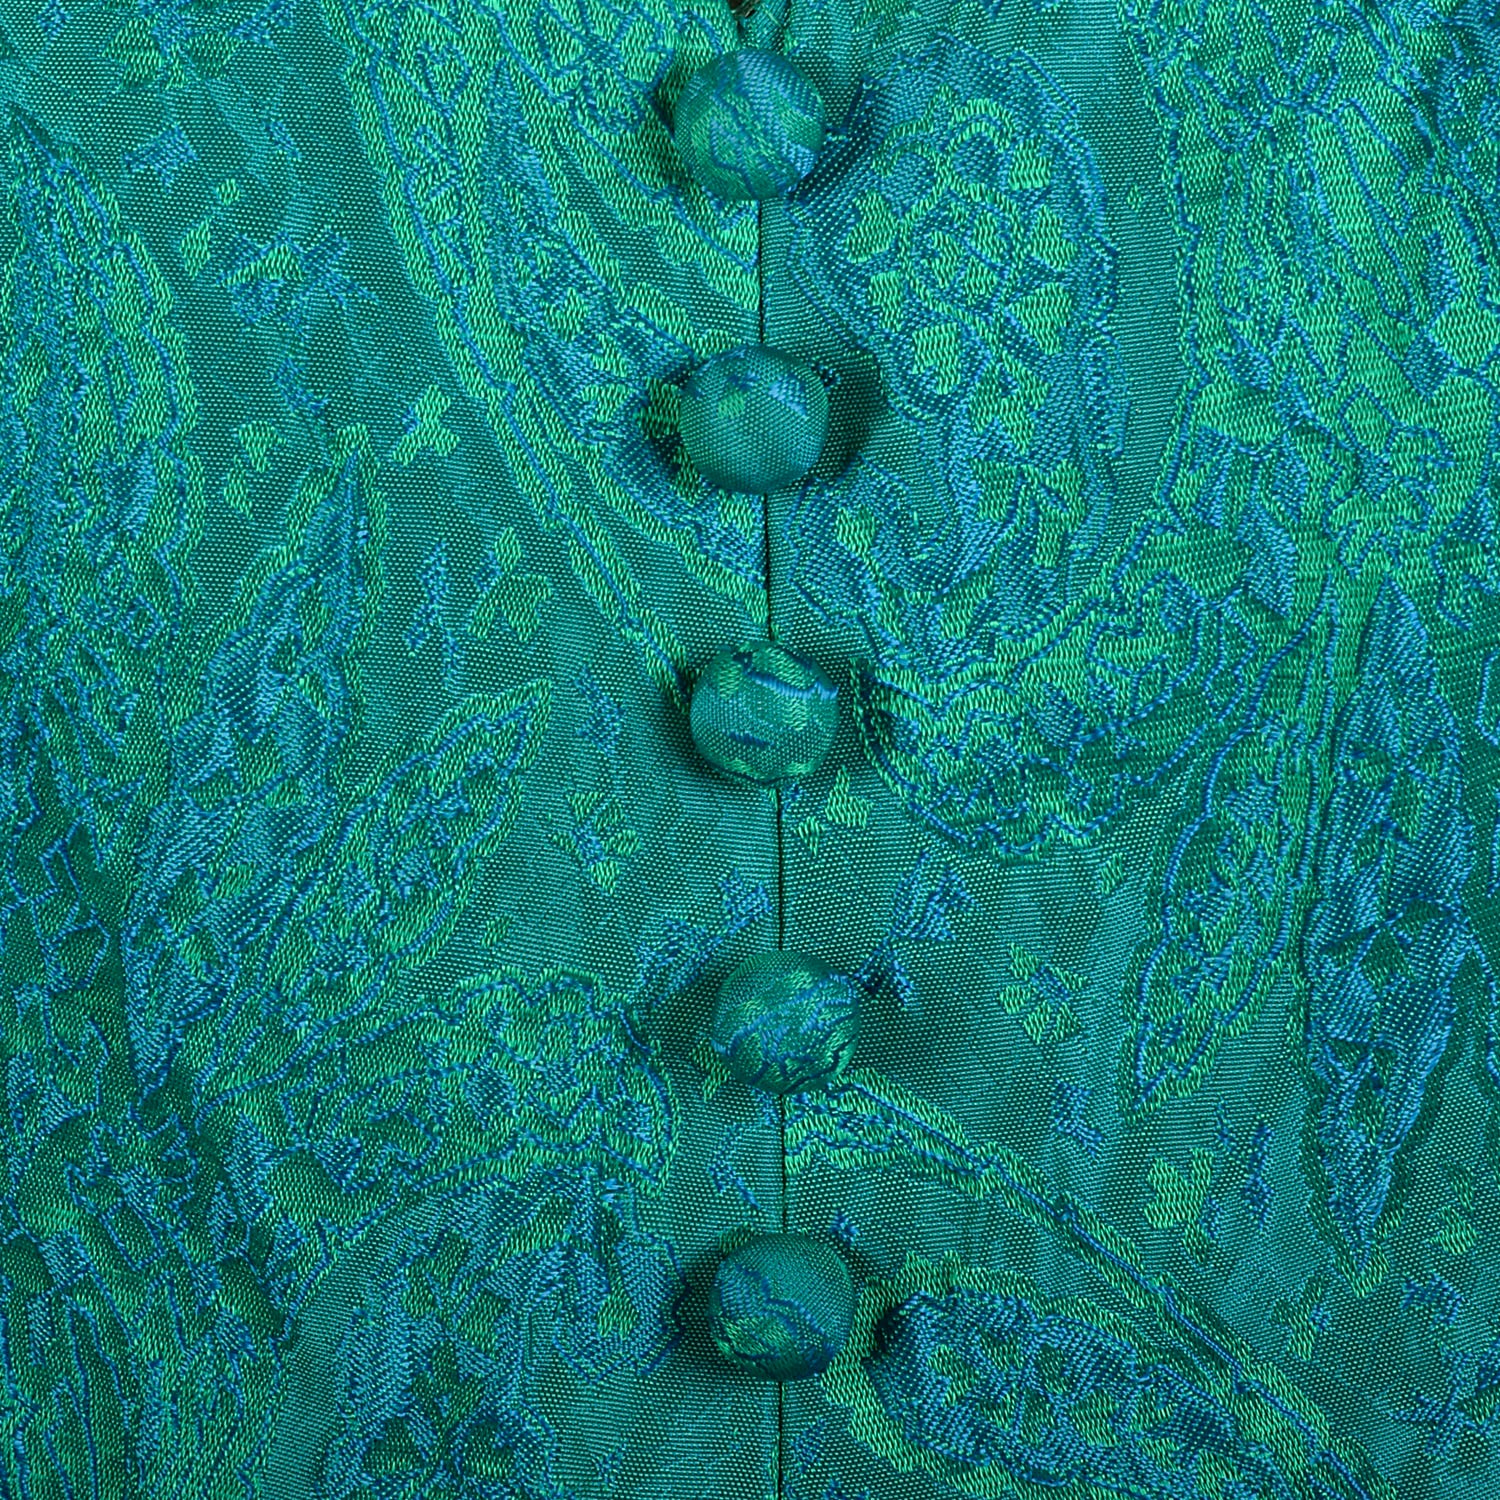 XS 1960s Blue Green Brocade Cocktail Dress Sleeveless Jewel Tone V-Neck Party Dress